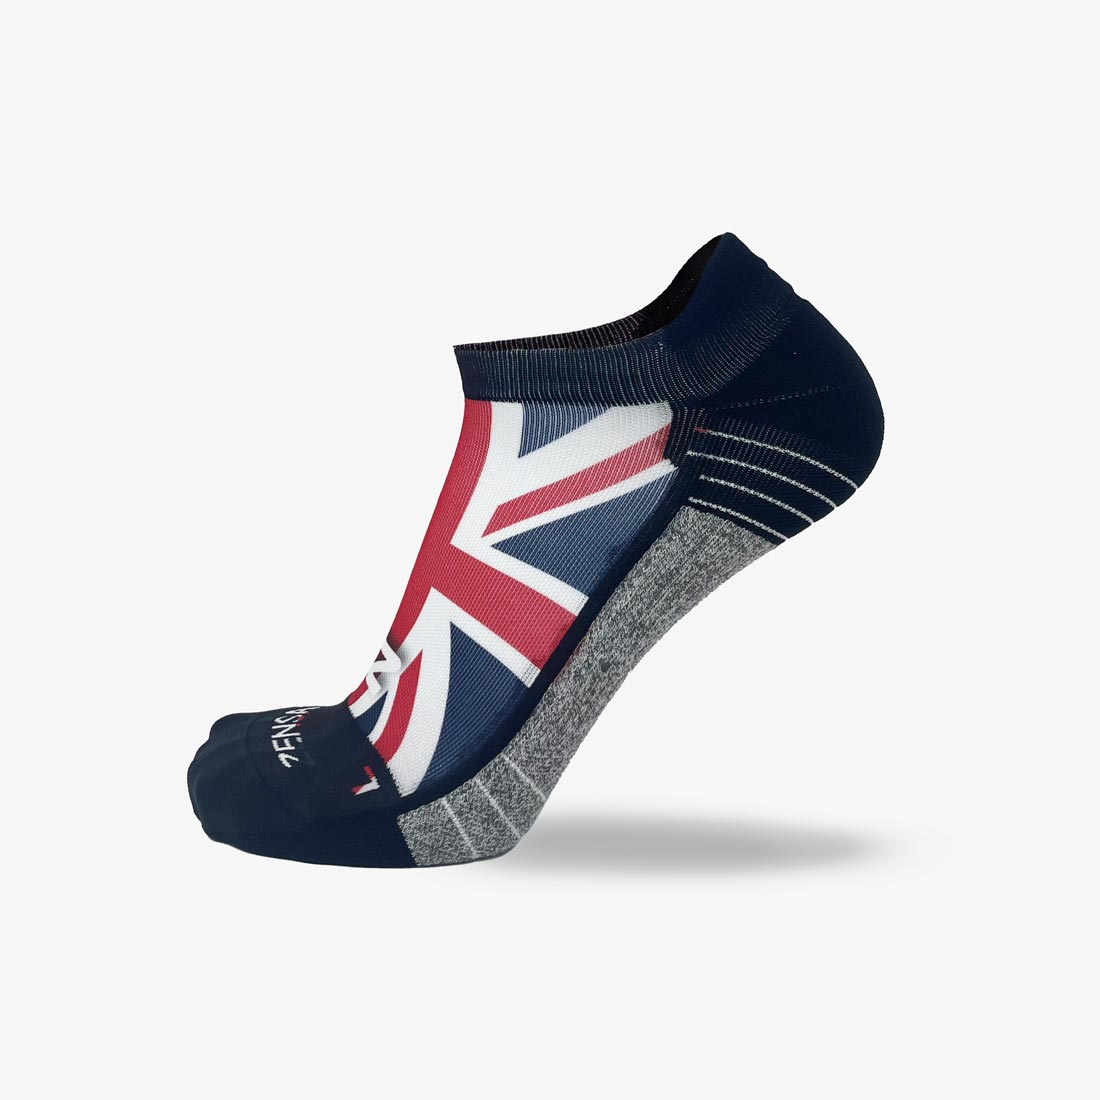 London Union Jack Running Socks (No Show)